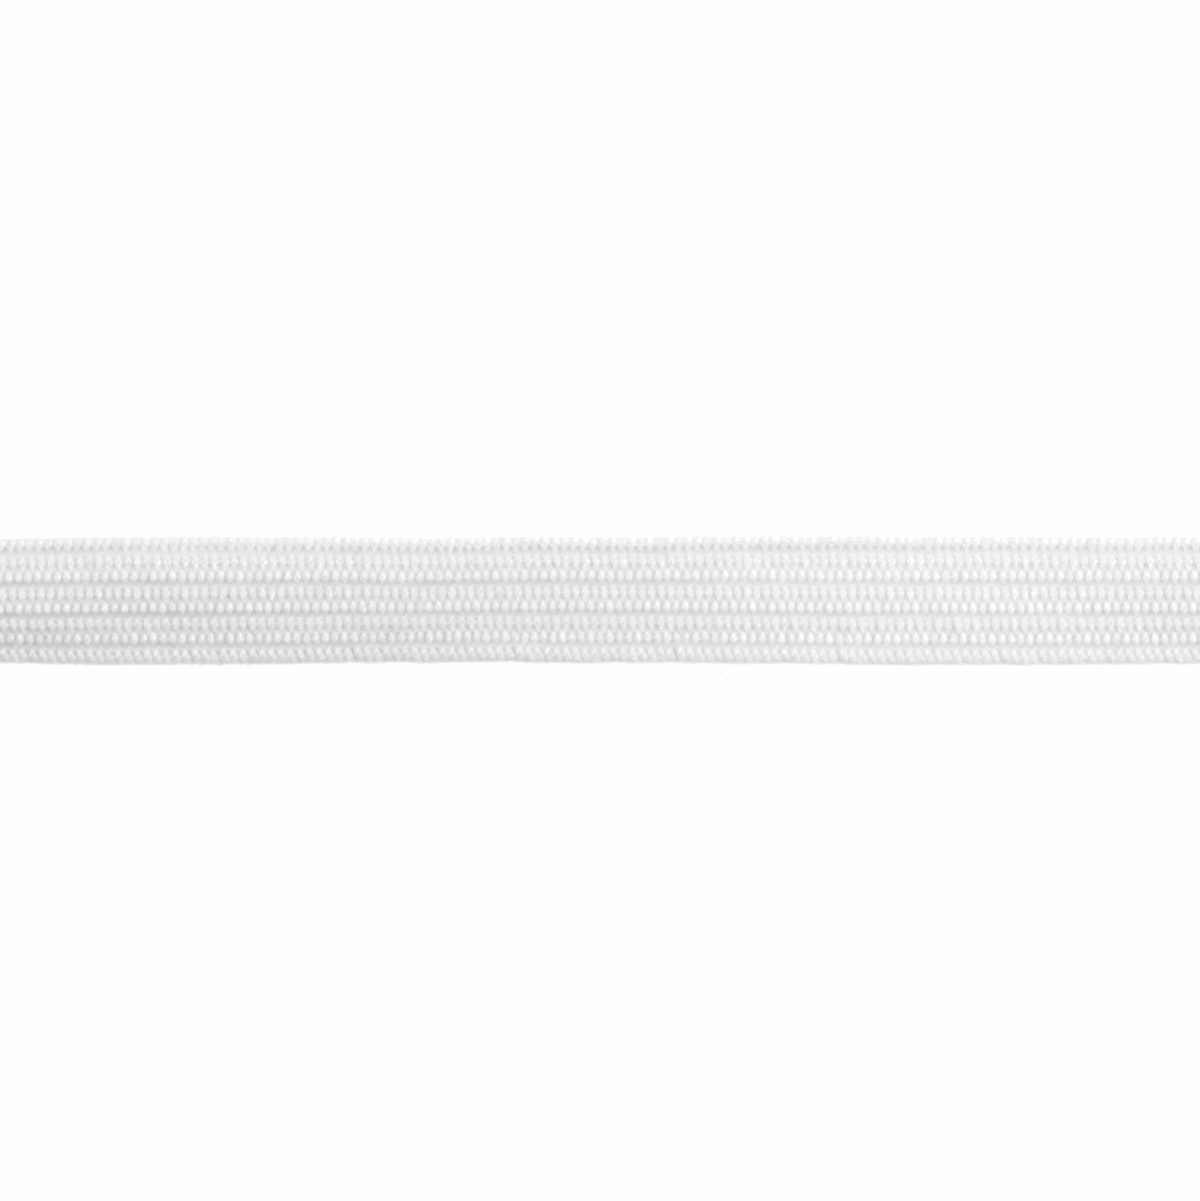 Sewing Gem - Braided Elastic - 12mm Wide - Black or White